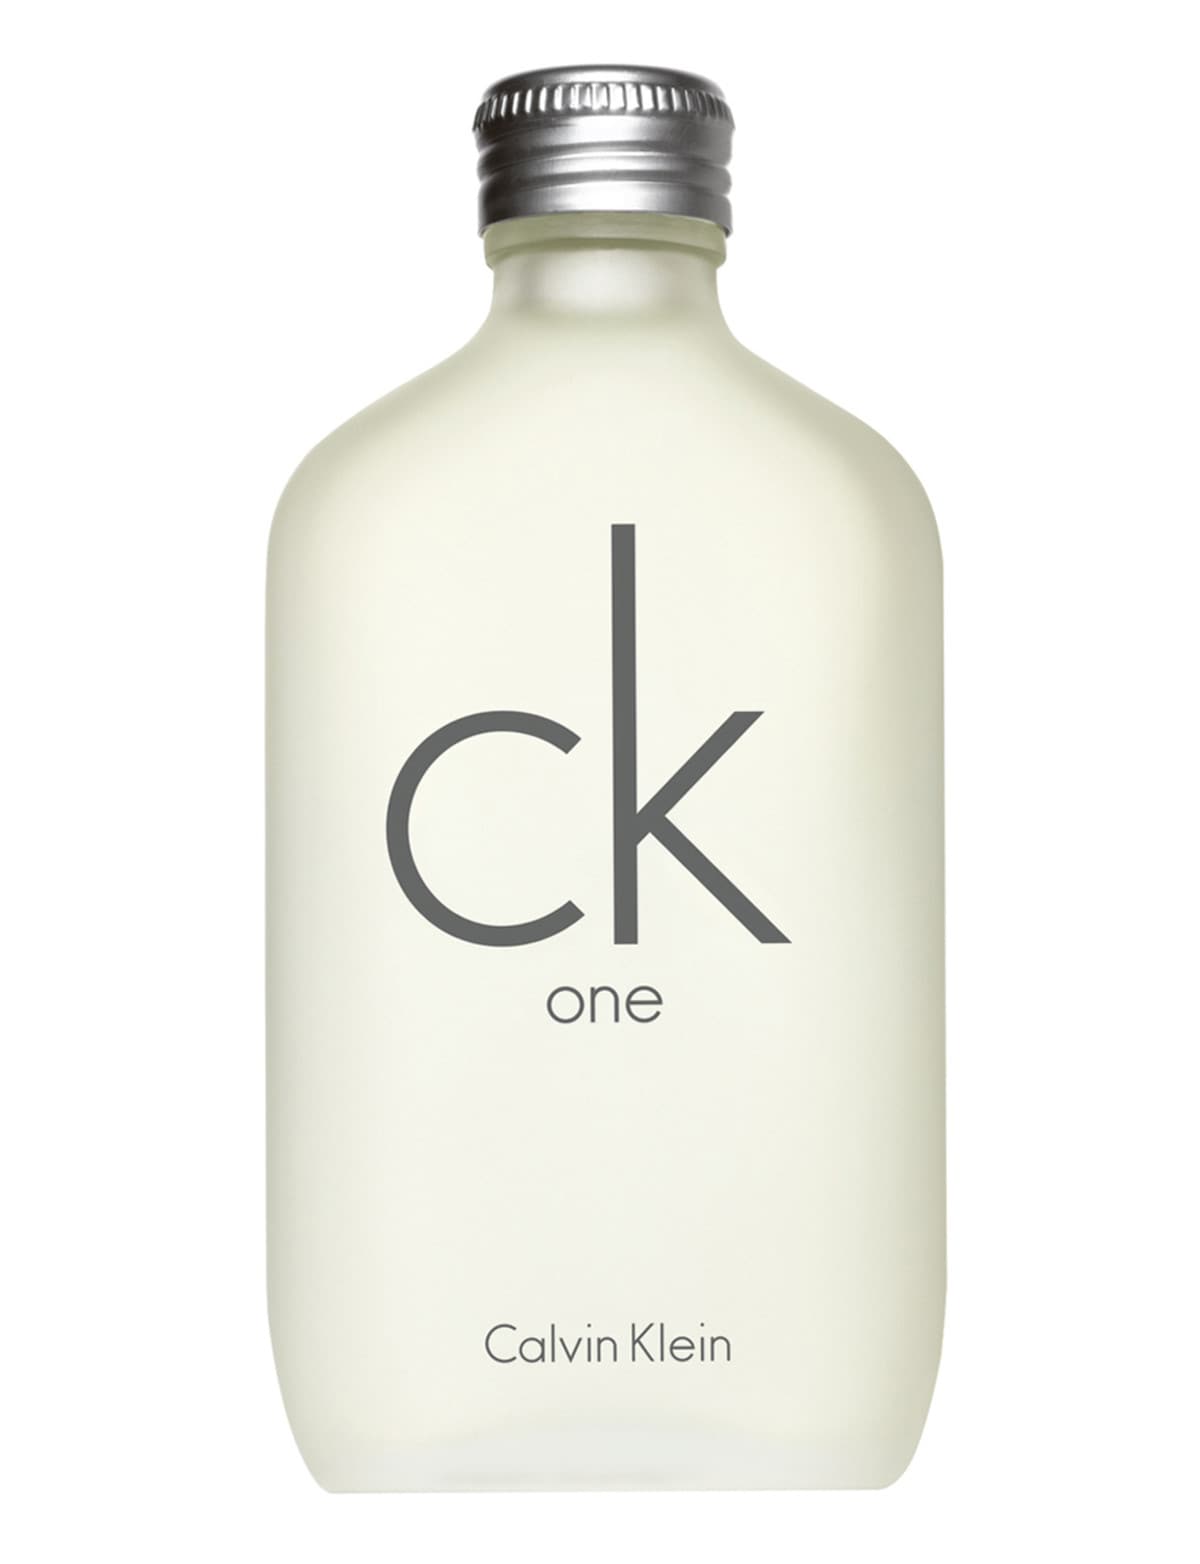 Calvin Klein CK One EDT, 50ml - Women's Perfumes